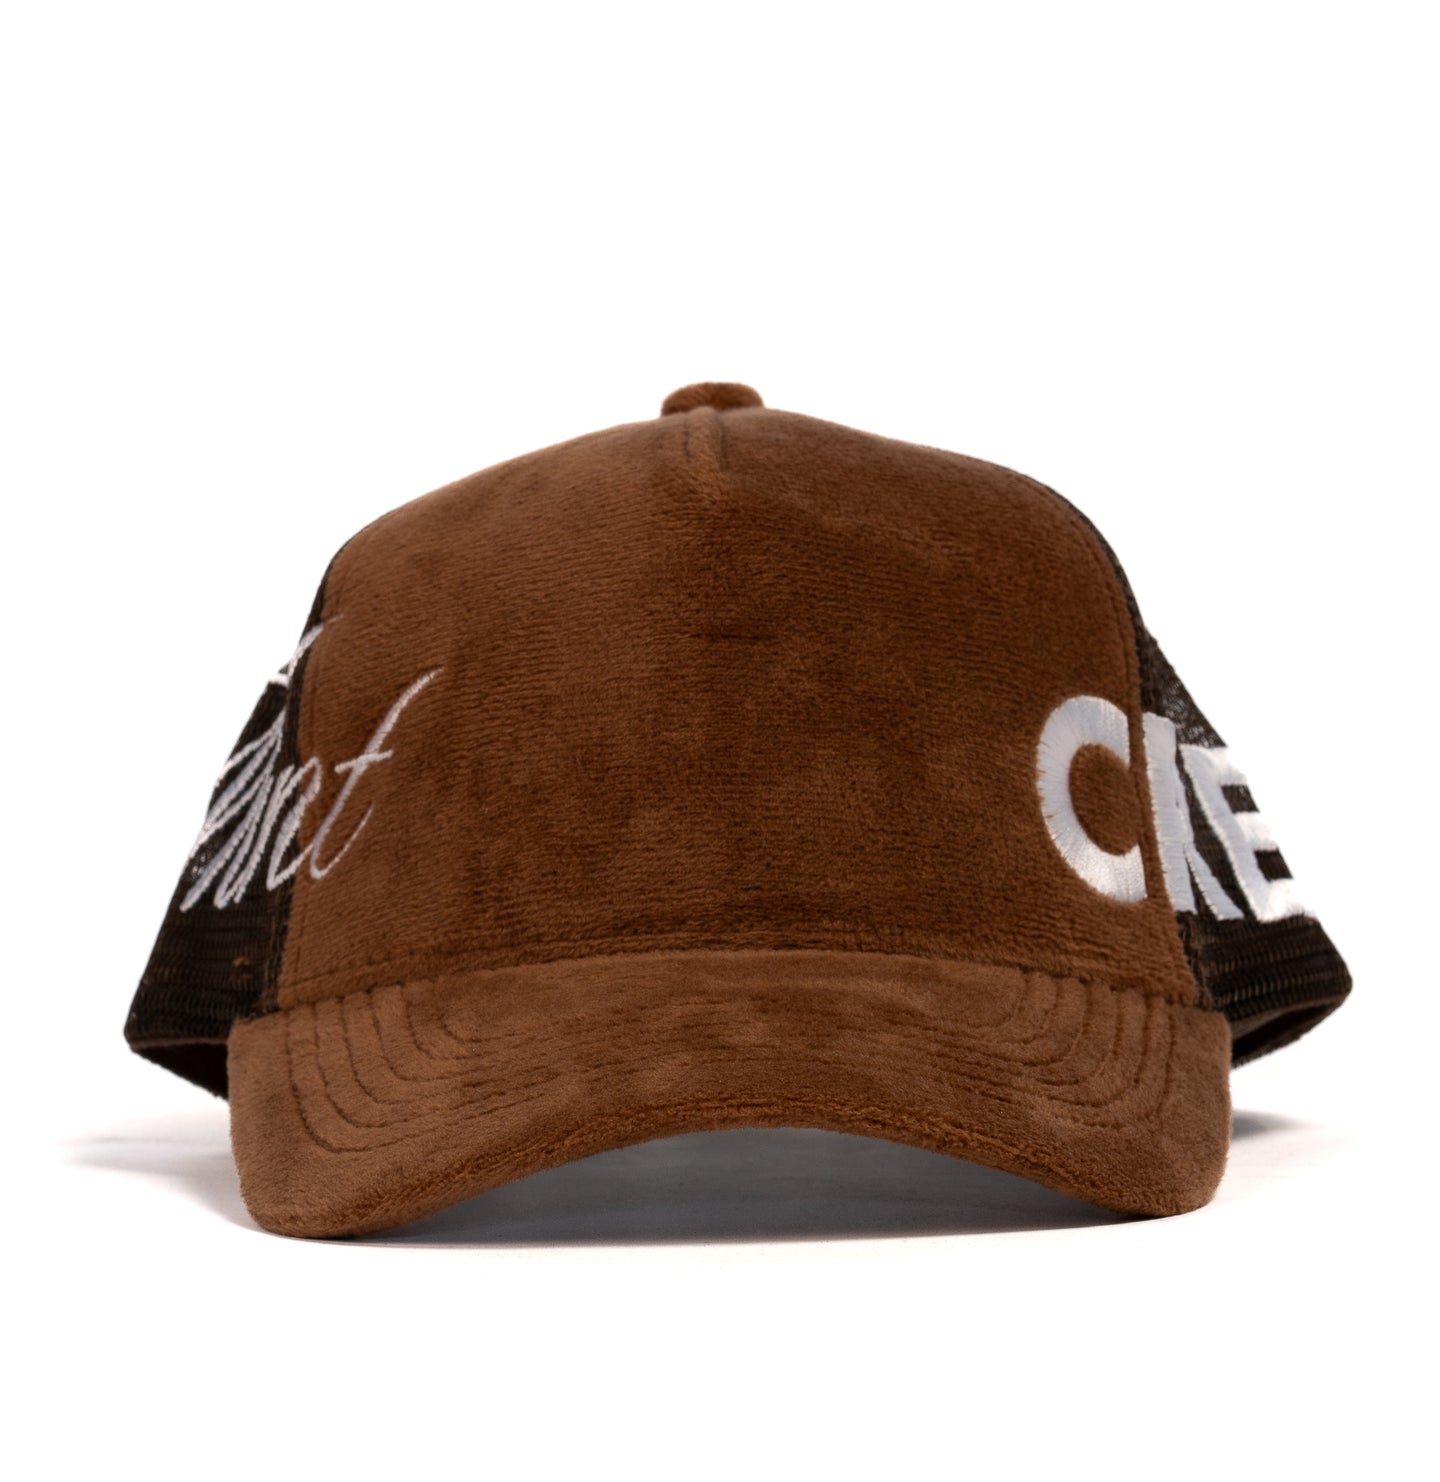 MINT CREW SKULL LOGO CAP (BROWN)